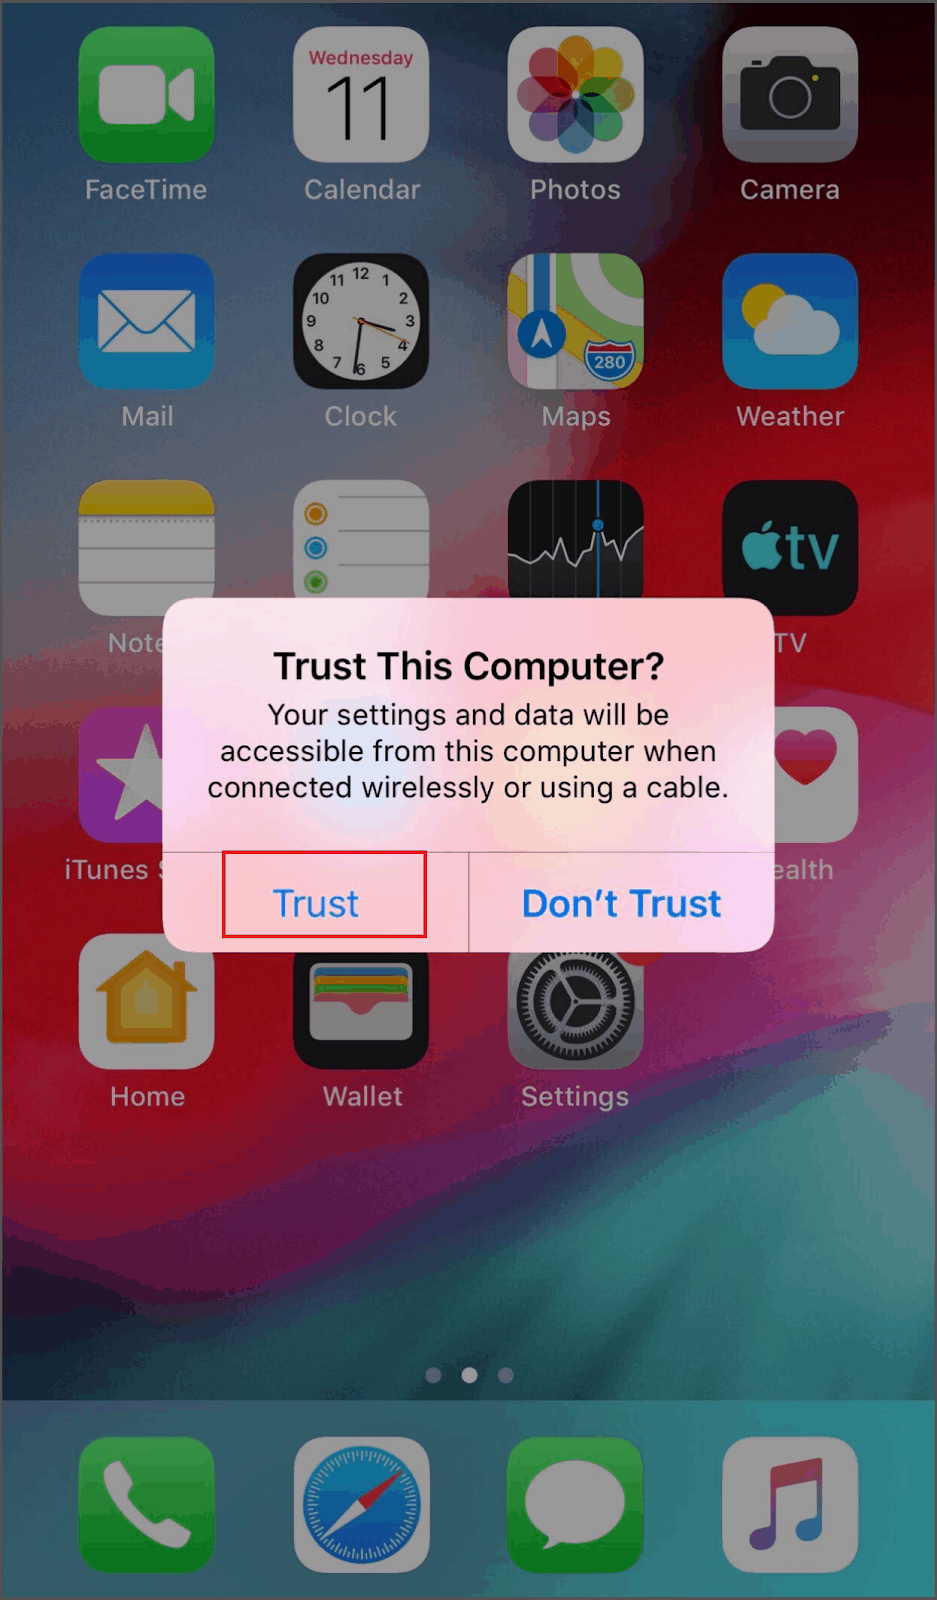  Trust this computer